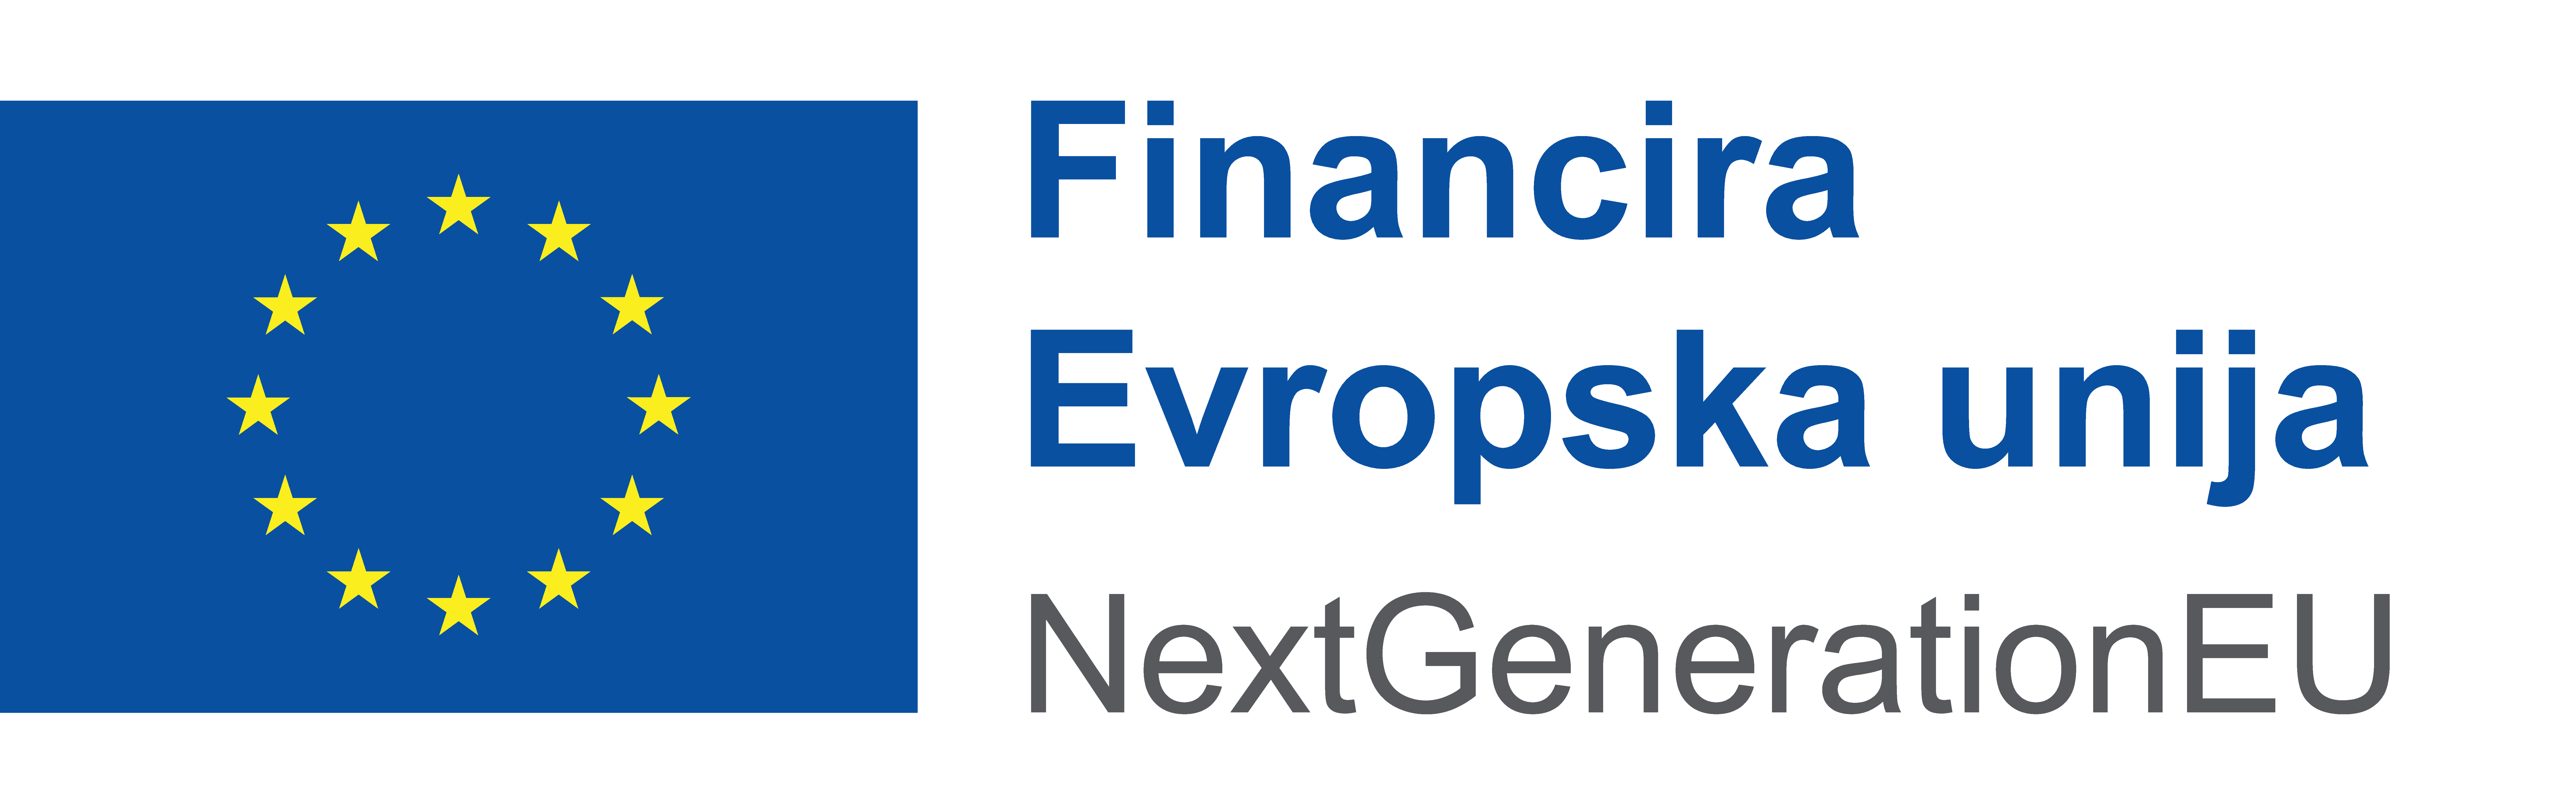 Financira-EU-NextGeneration